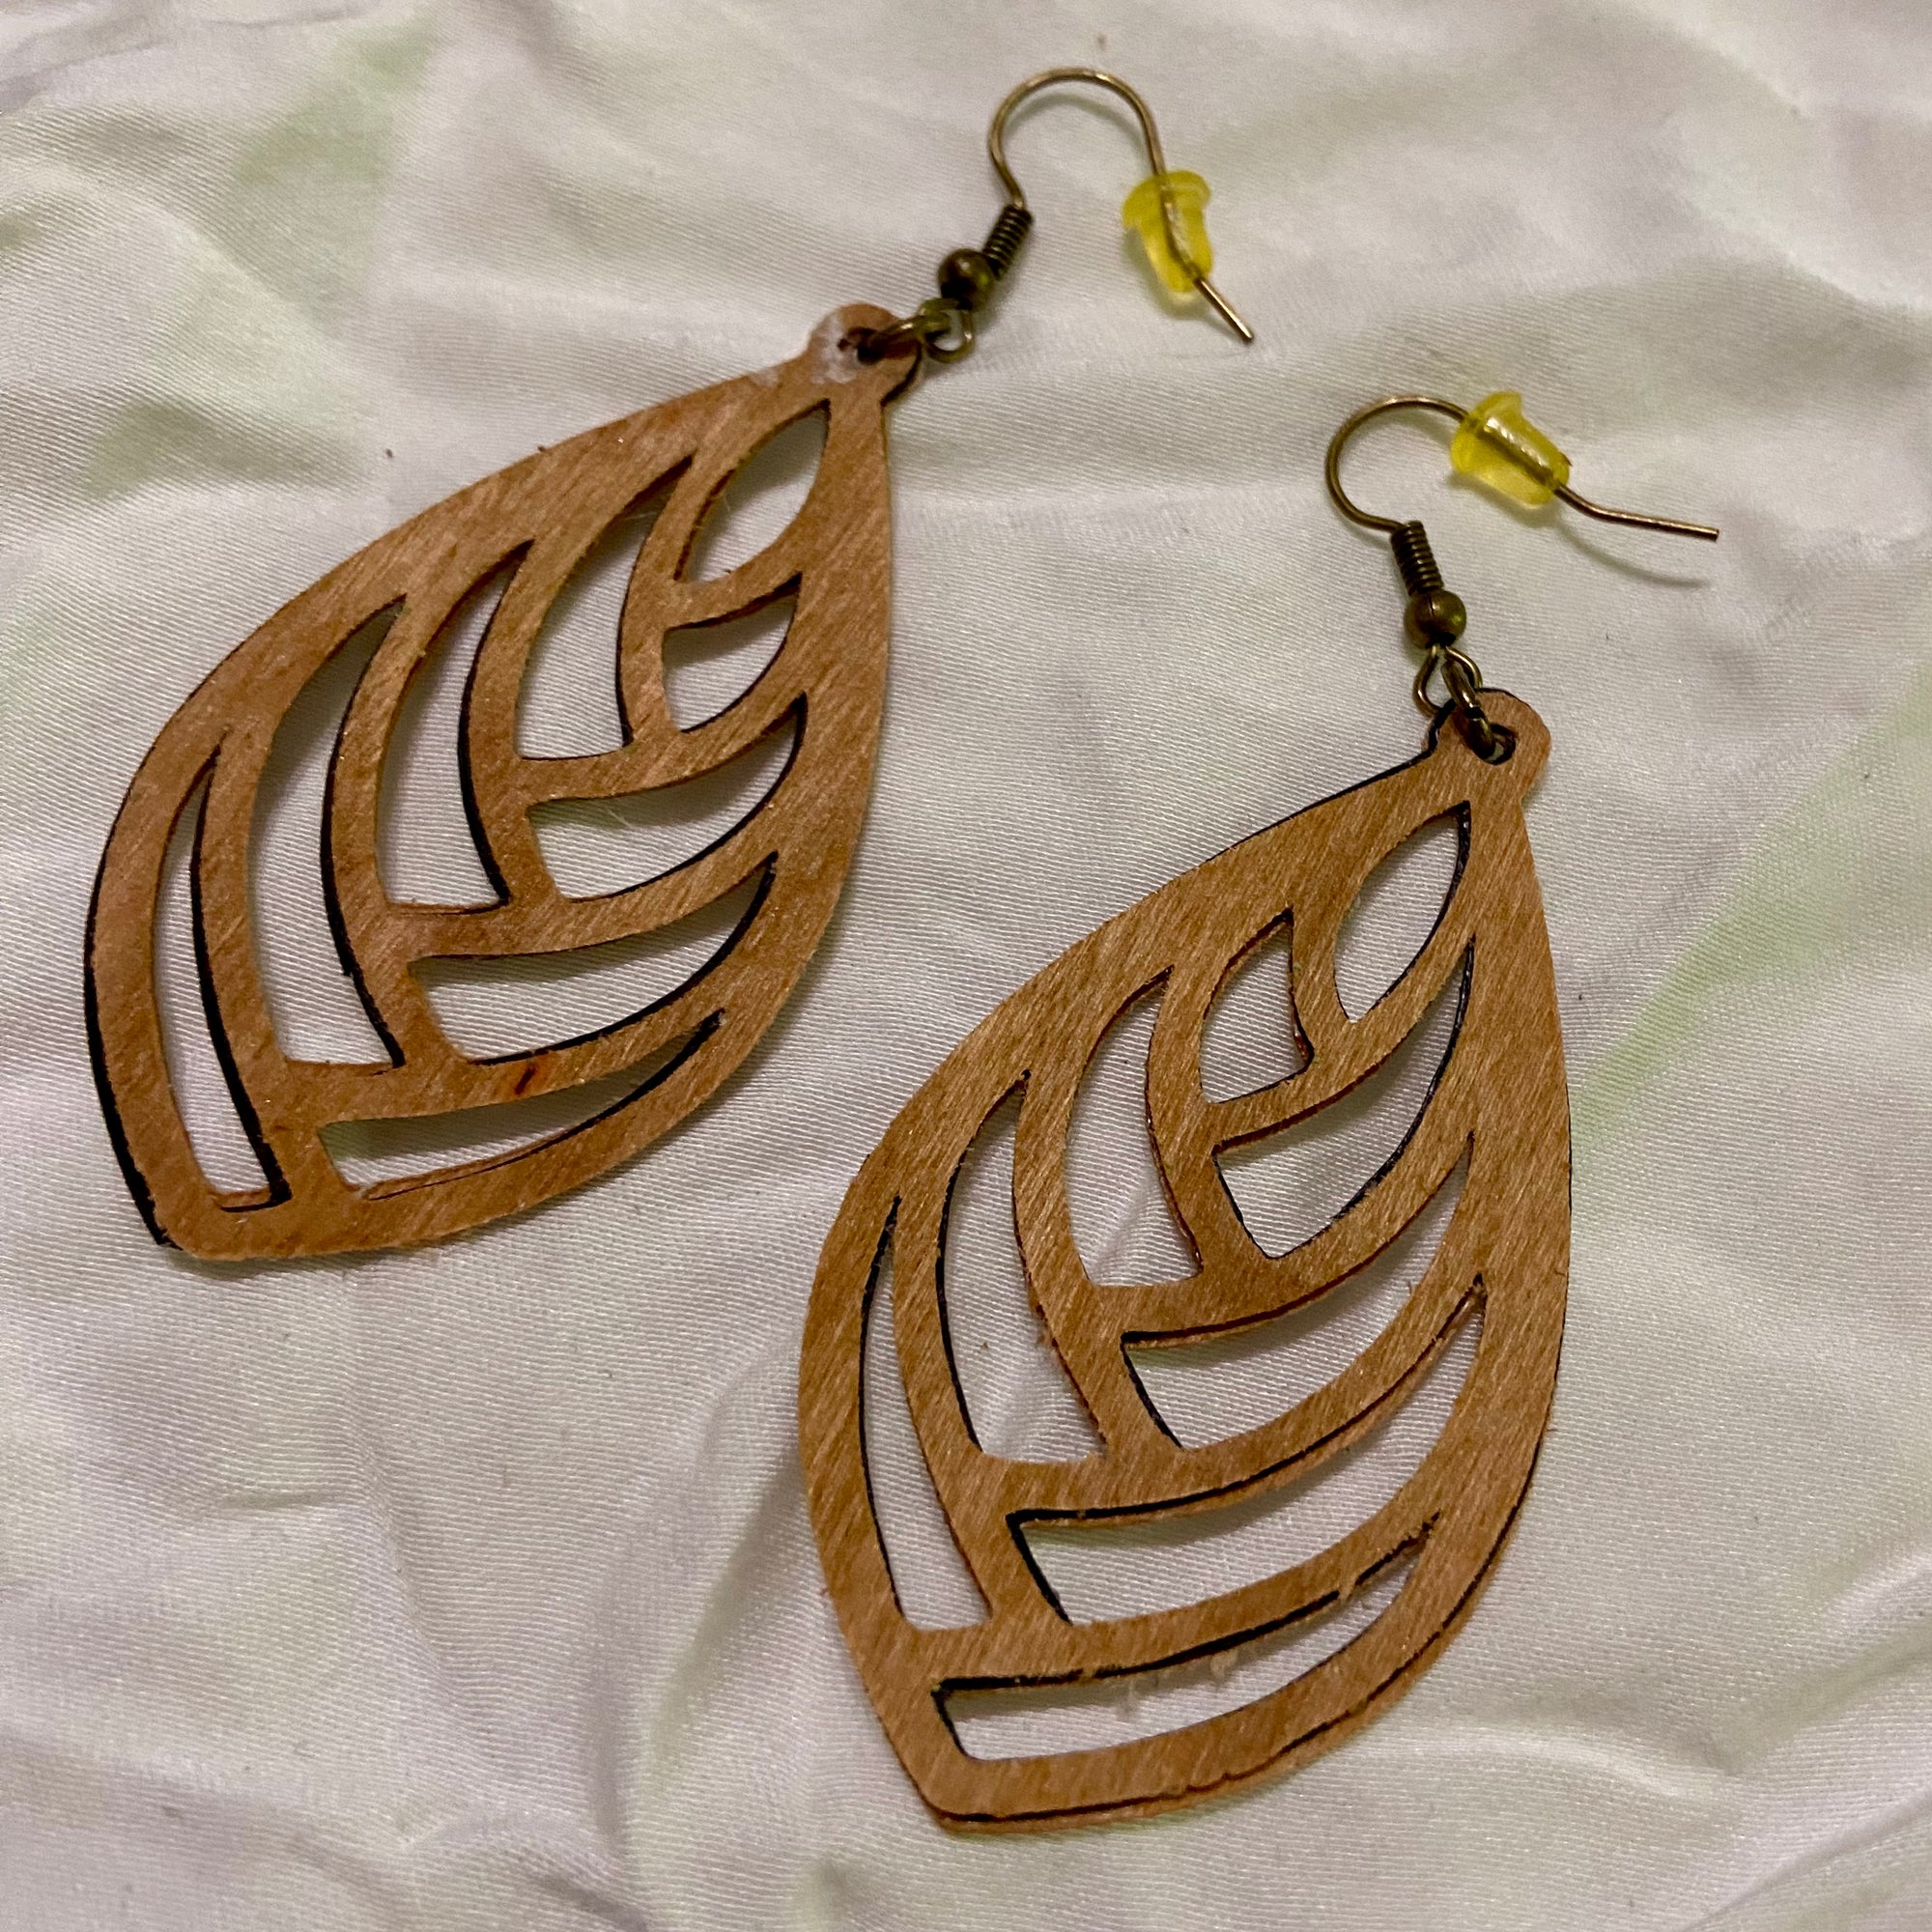 B. Light Earrings - Medium Wood Leaf Earrings